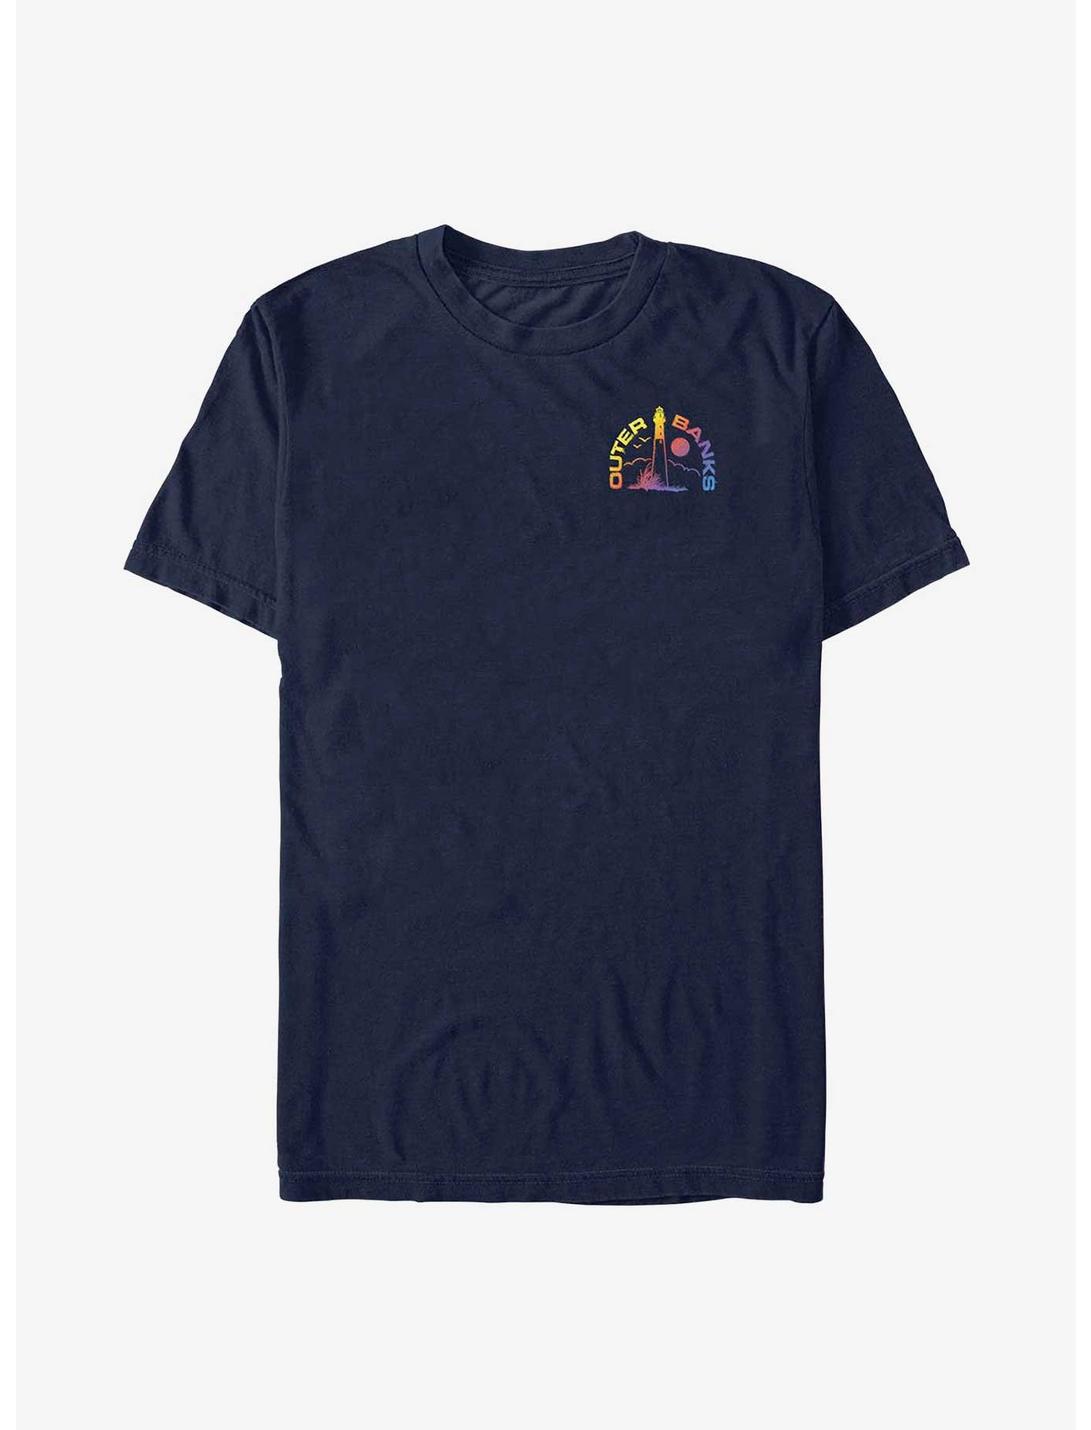 Outer Banks Gradient Logo T-Shirt, NAVY, hi-res